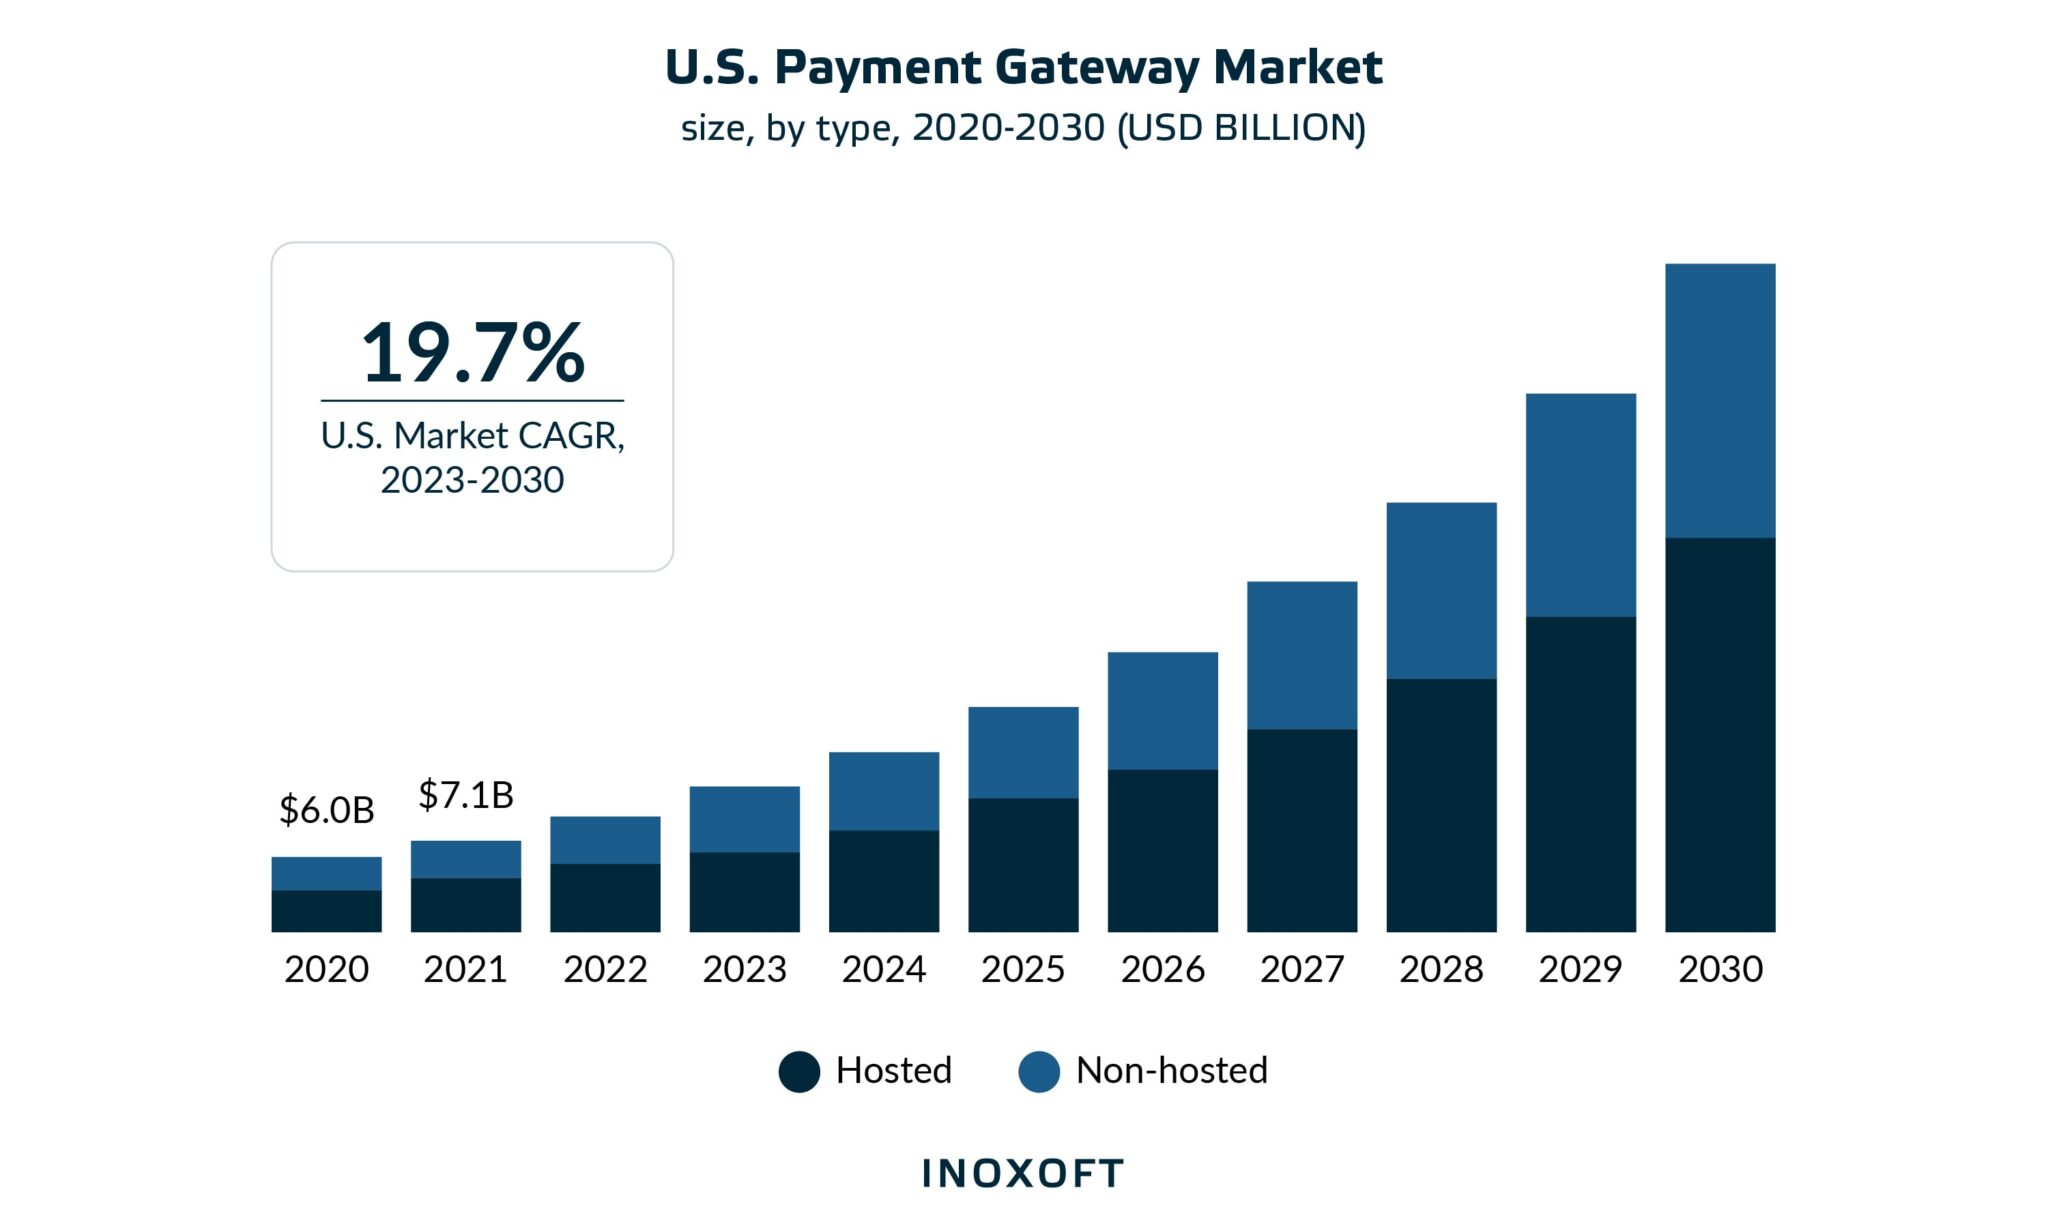 U.S. payment gateway market size, by type, 2020 - 2030 (USD Billion)